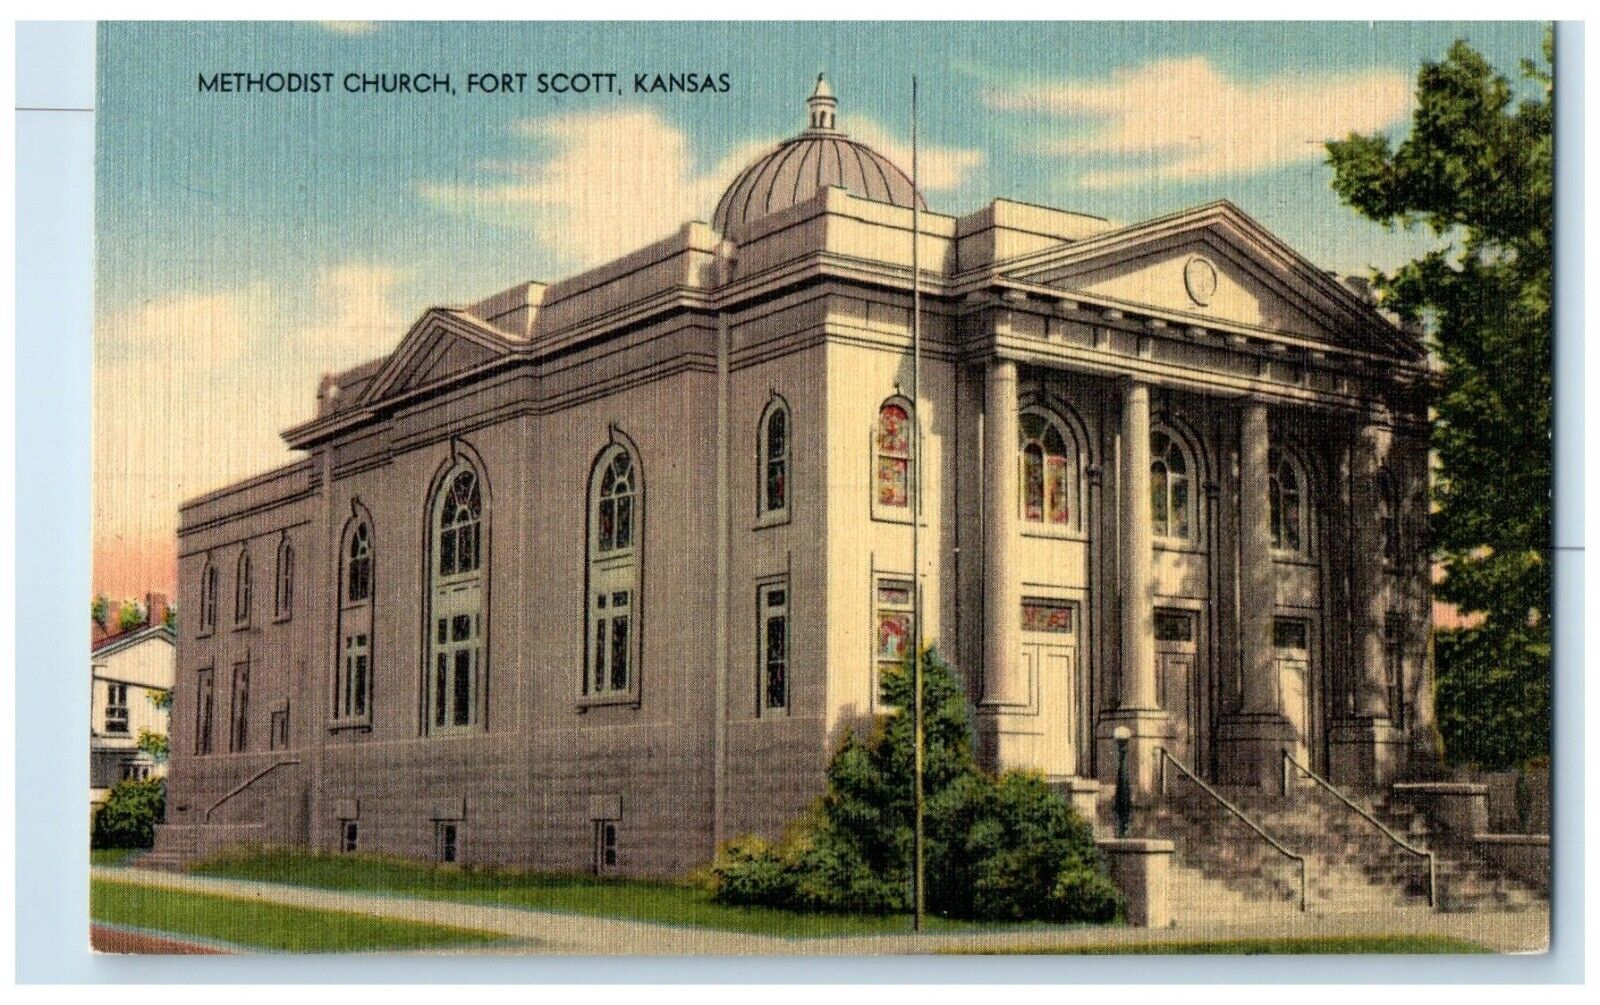 c1947 Methodist Church Chapel Exterior View Building Fort Scott Kansas Postcard